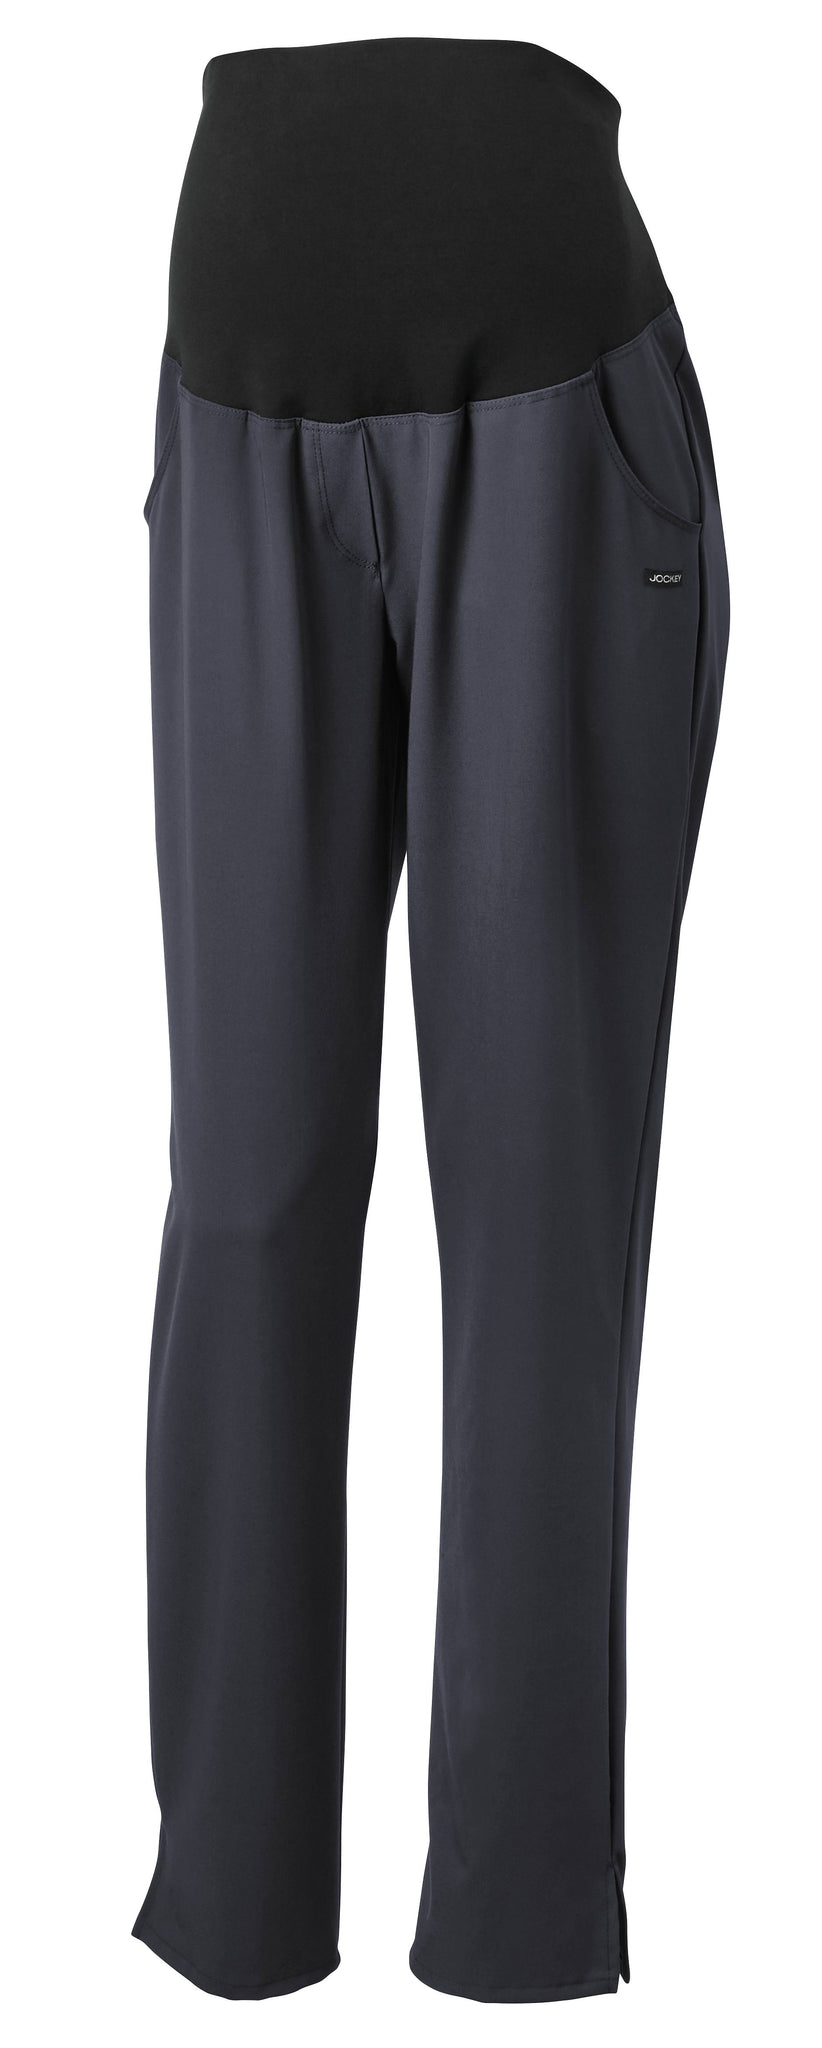 Jockey Sportswear Travel Pant Slim Leg Tan Zip Pocket Nylon Stretch 34x30.5  L | eBay